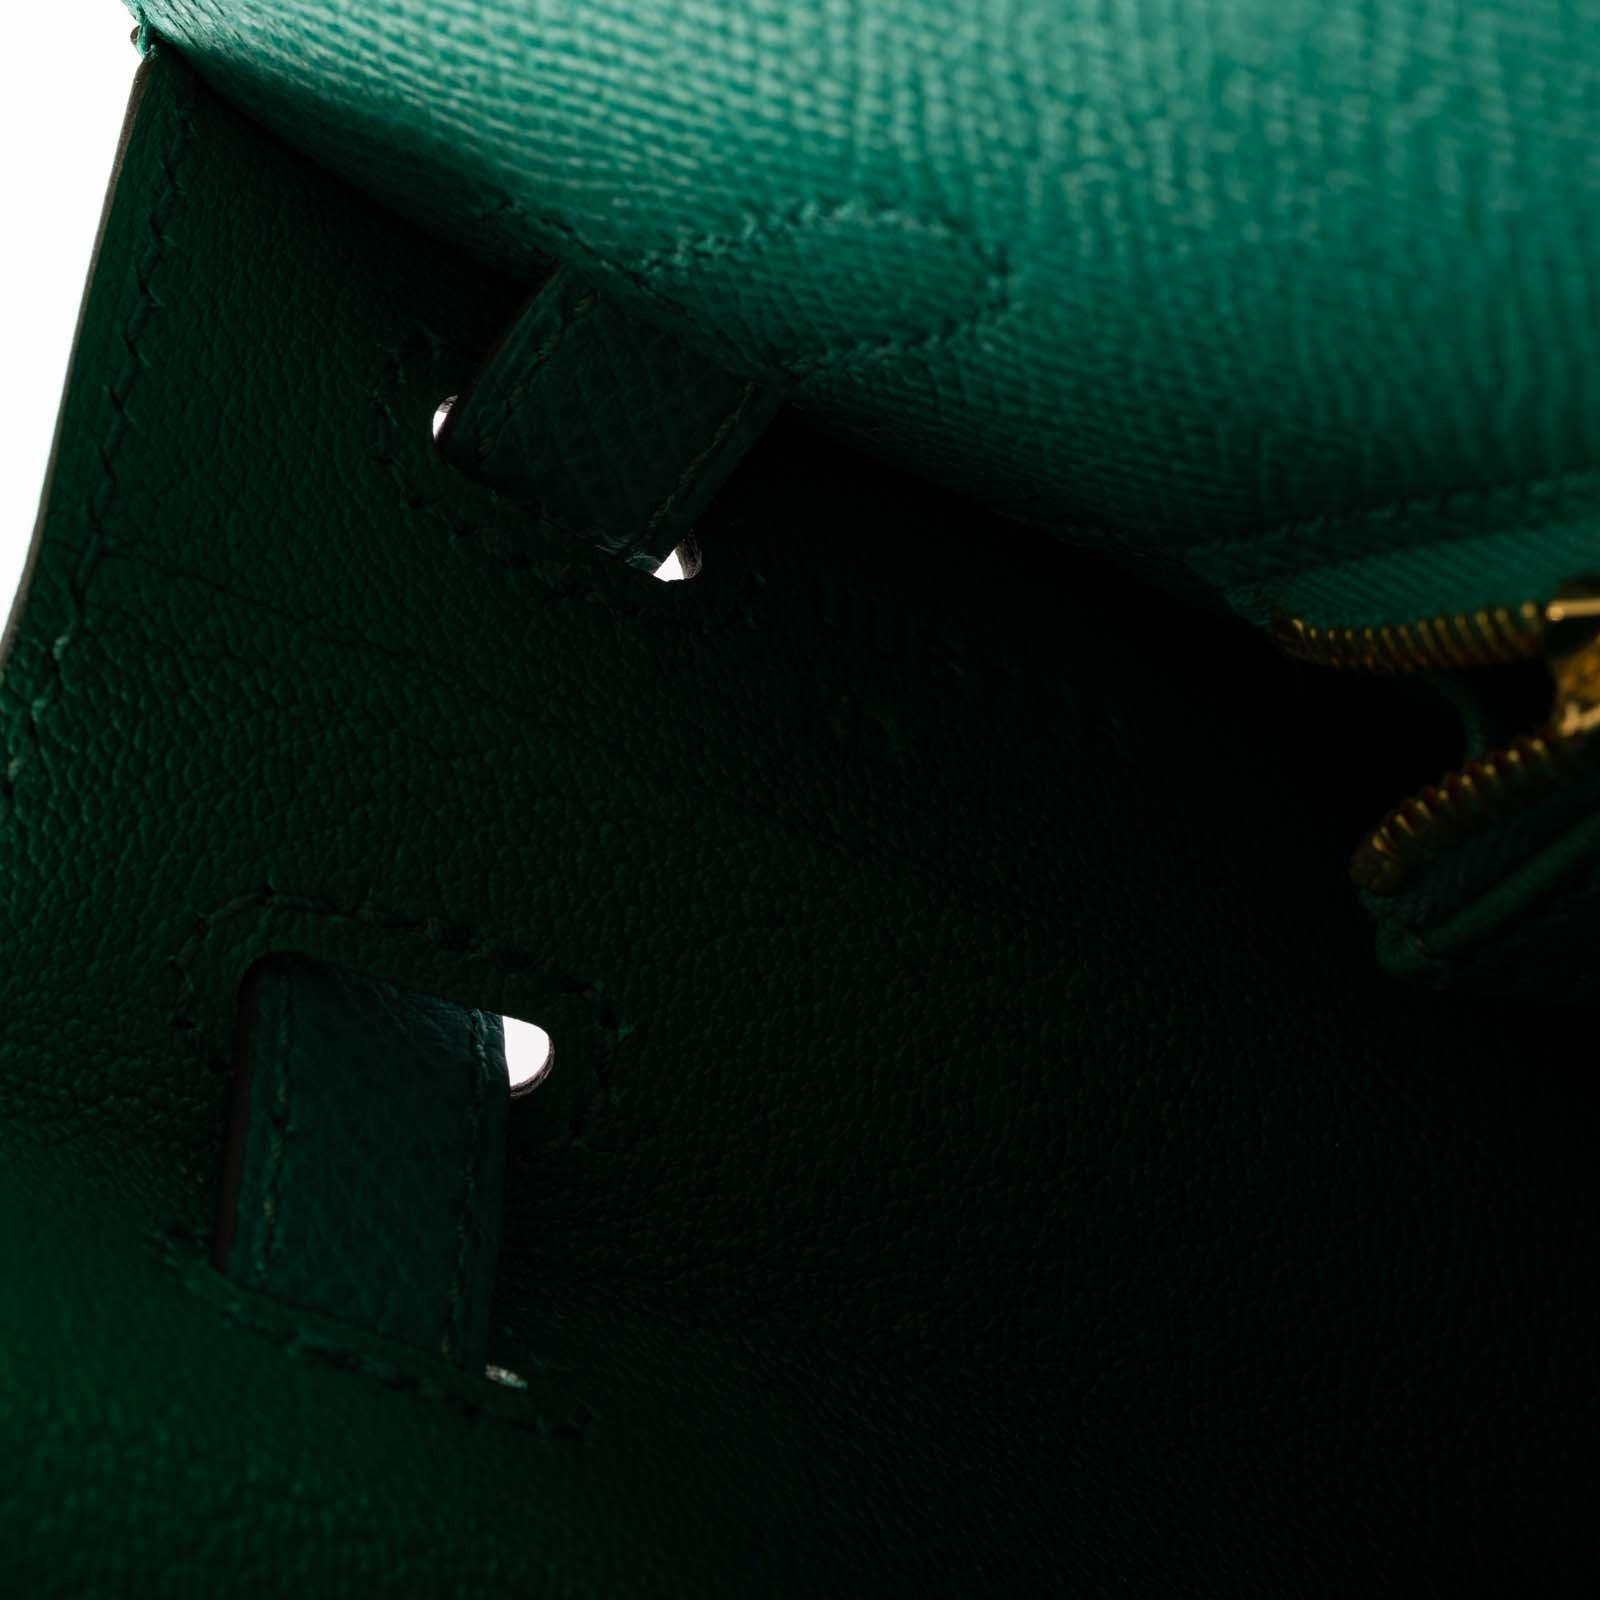 Hermès Kelly 25 Sellier Vert Jade Epsom with Gold Hardware